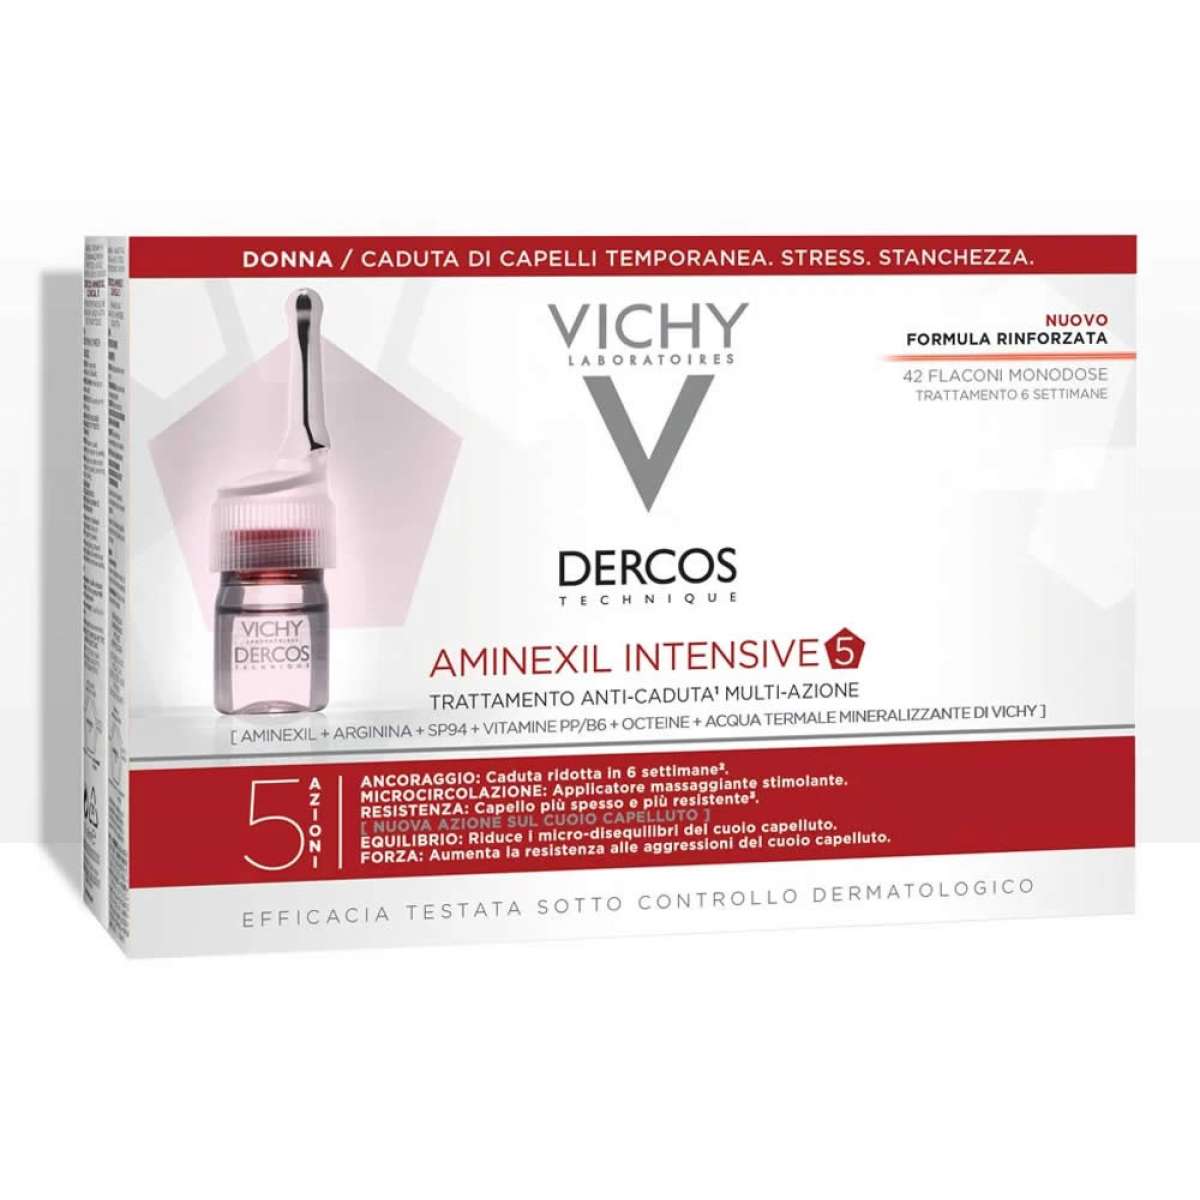 Vichy Aminexil Intensive 5 для женщин. Dercos Vichy ампулы от выпадения. Виши Деркос 6 мл. Vichy Dercos Aminexil Intensive 5, средство против выпадения волос для женщин.